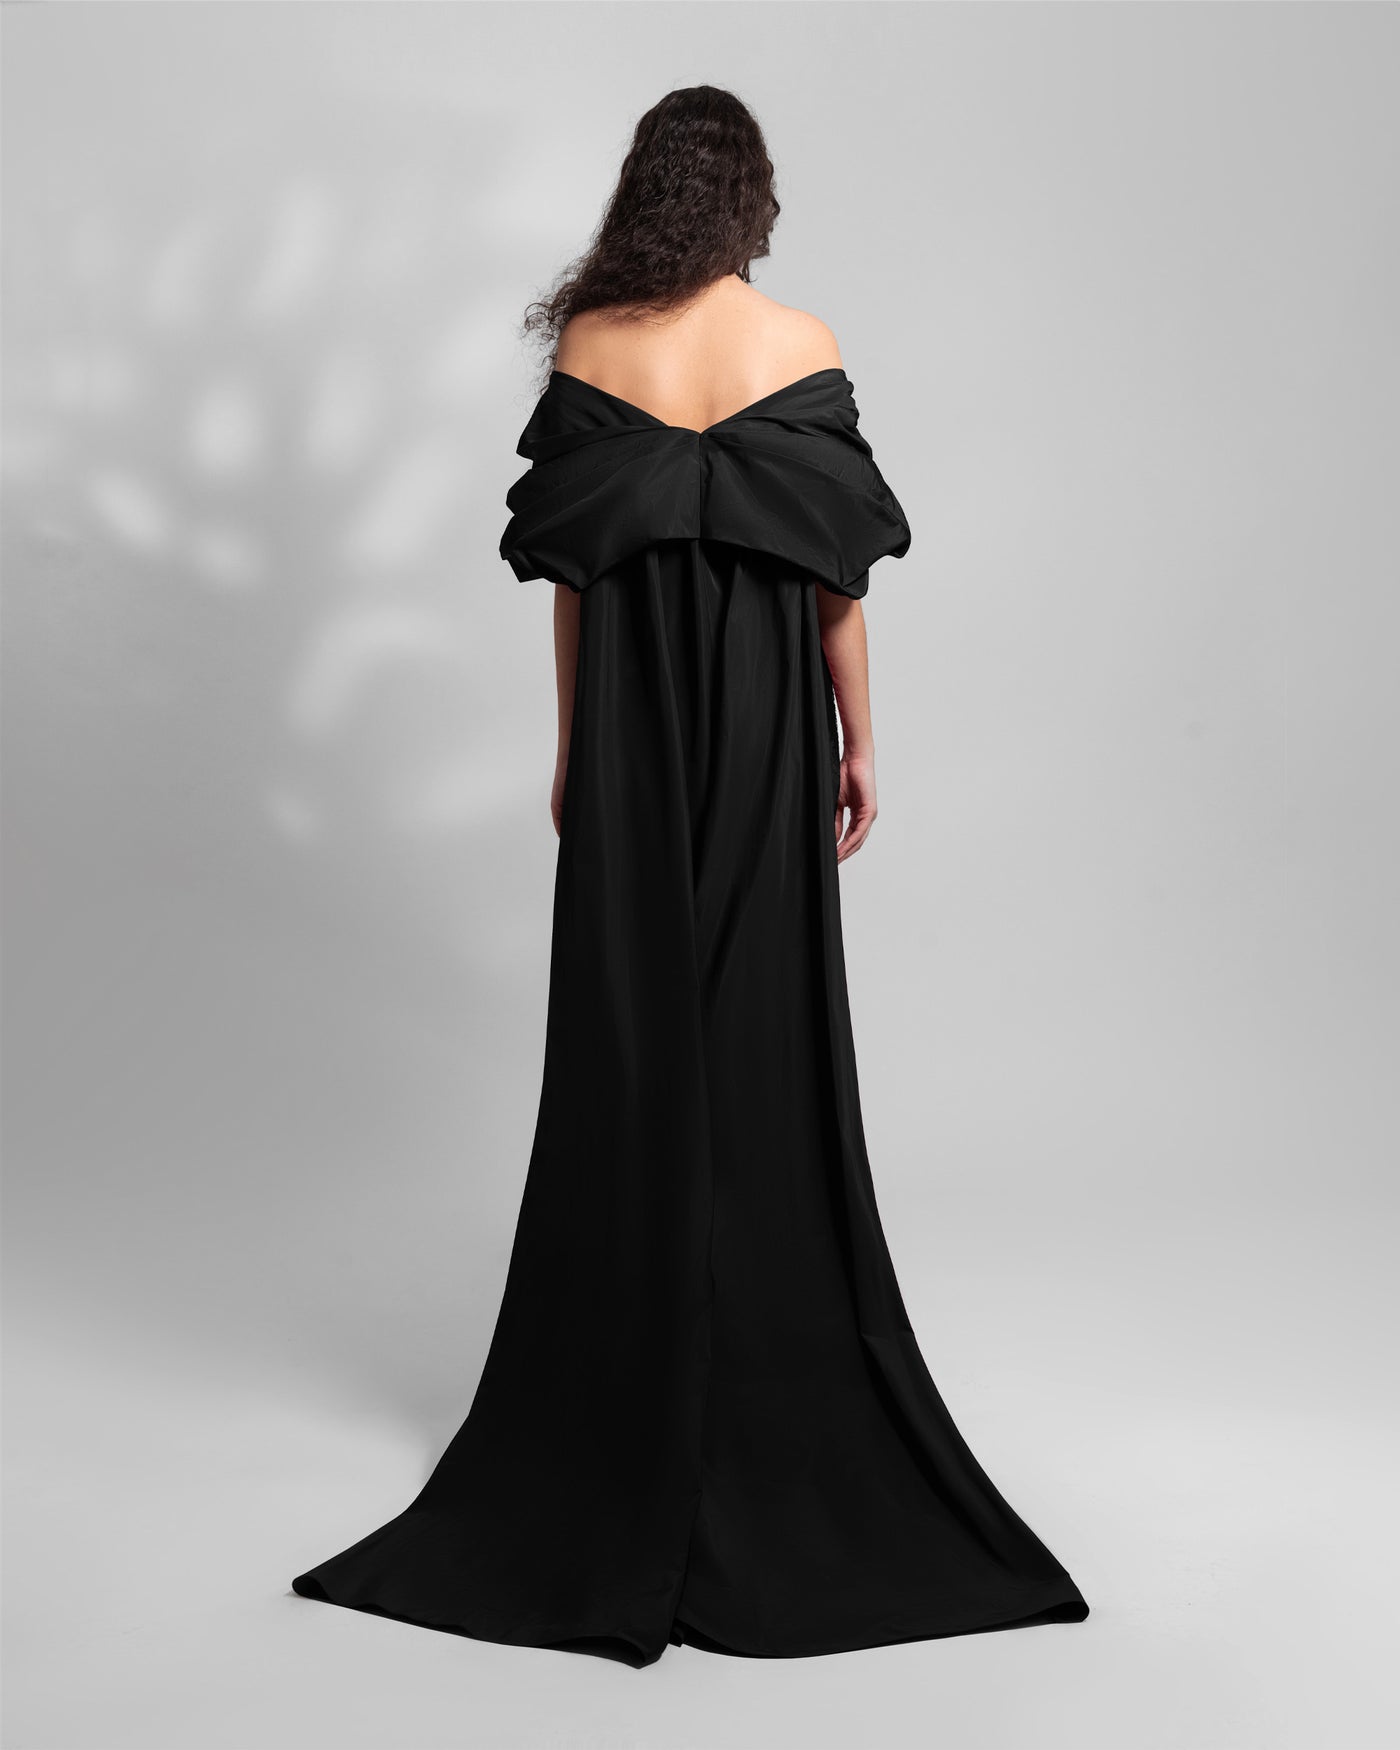 Folded Strapless Neckline Black Dress